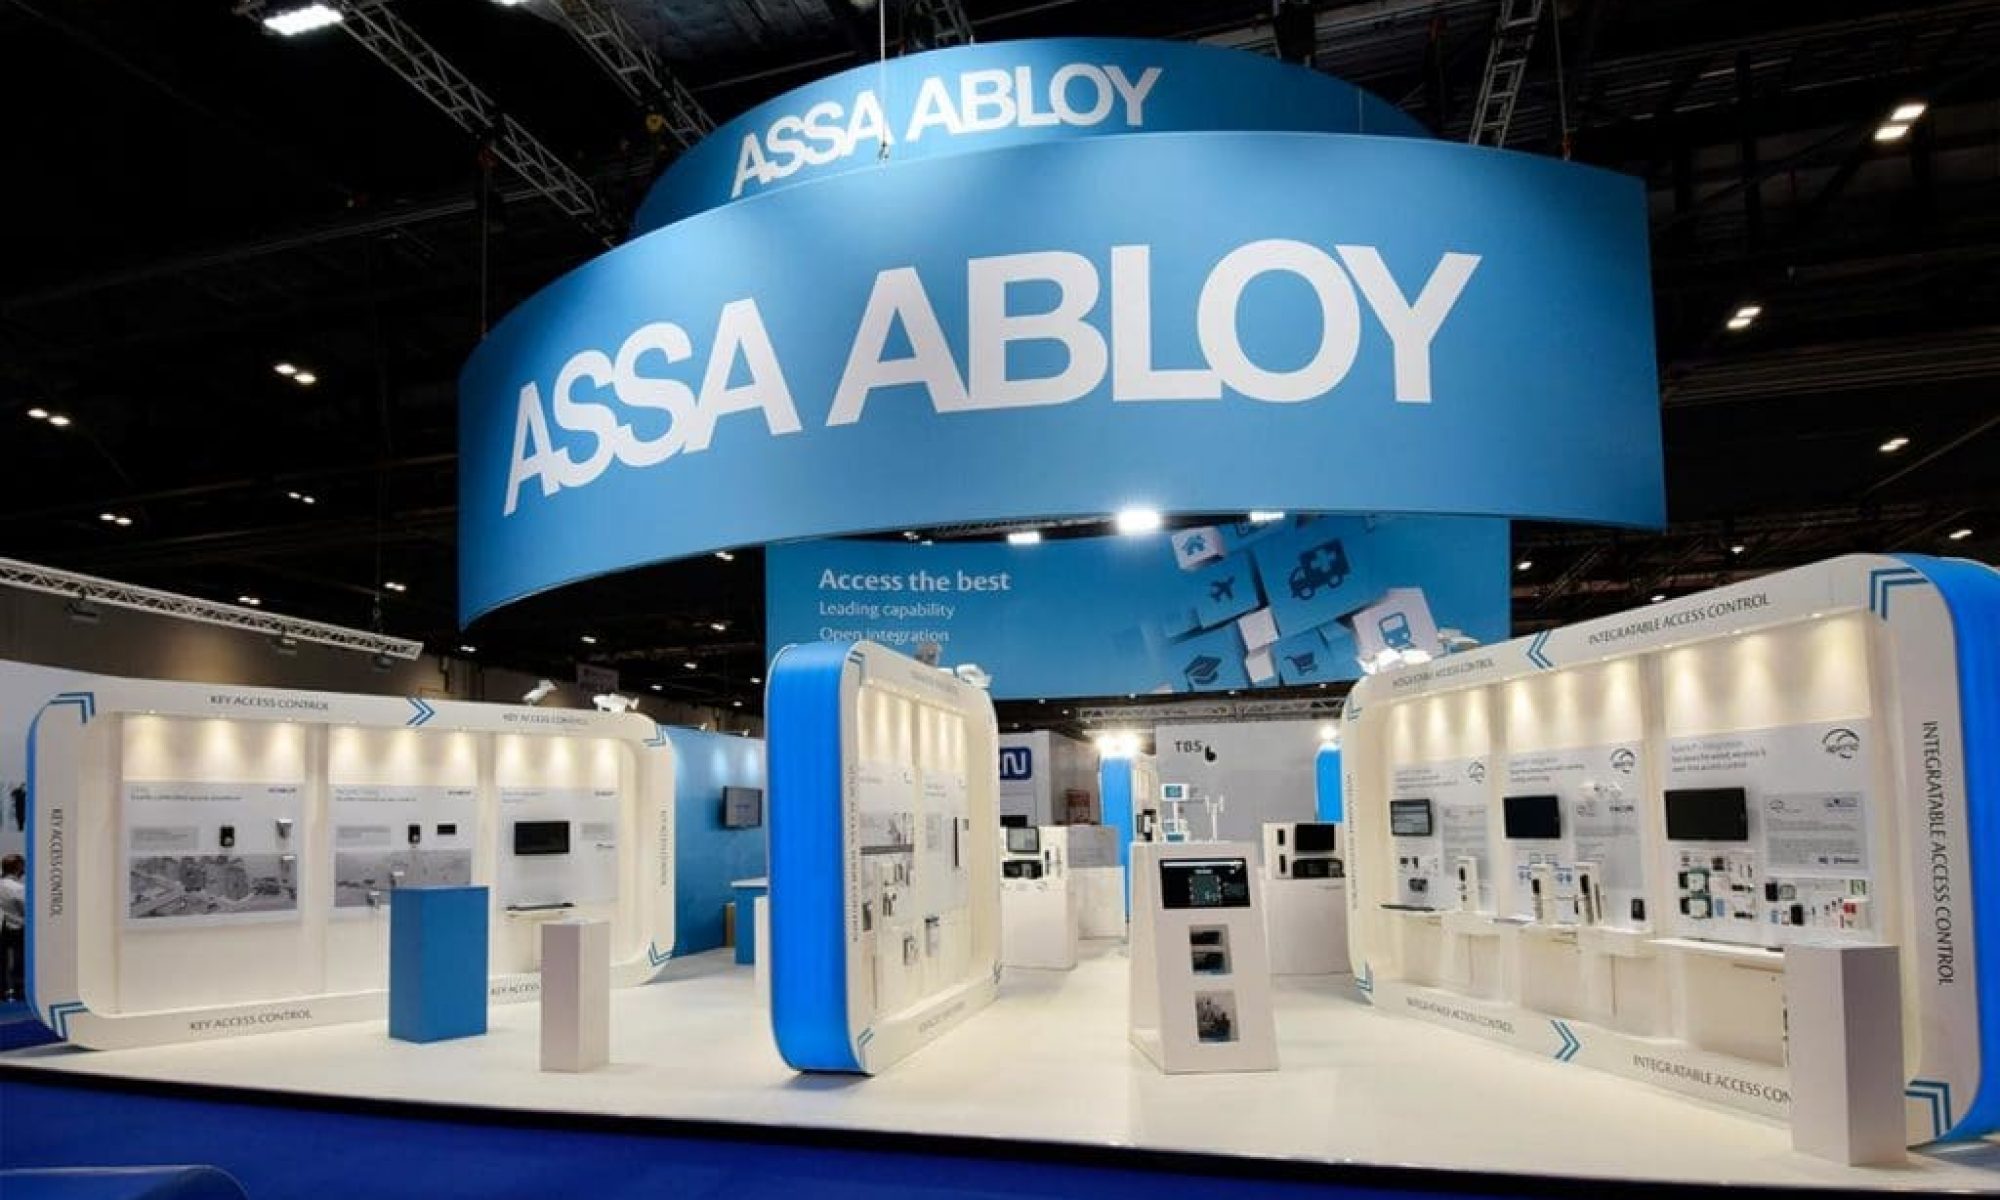 Assa Abloy Exhibition Stand